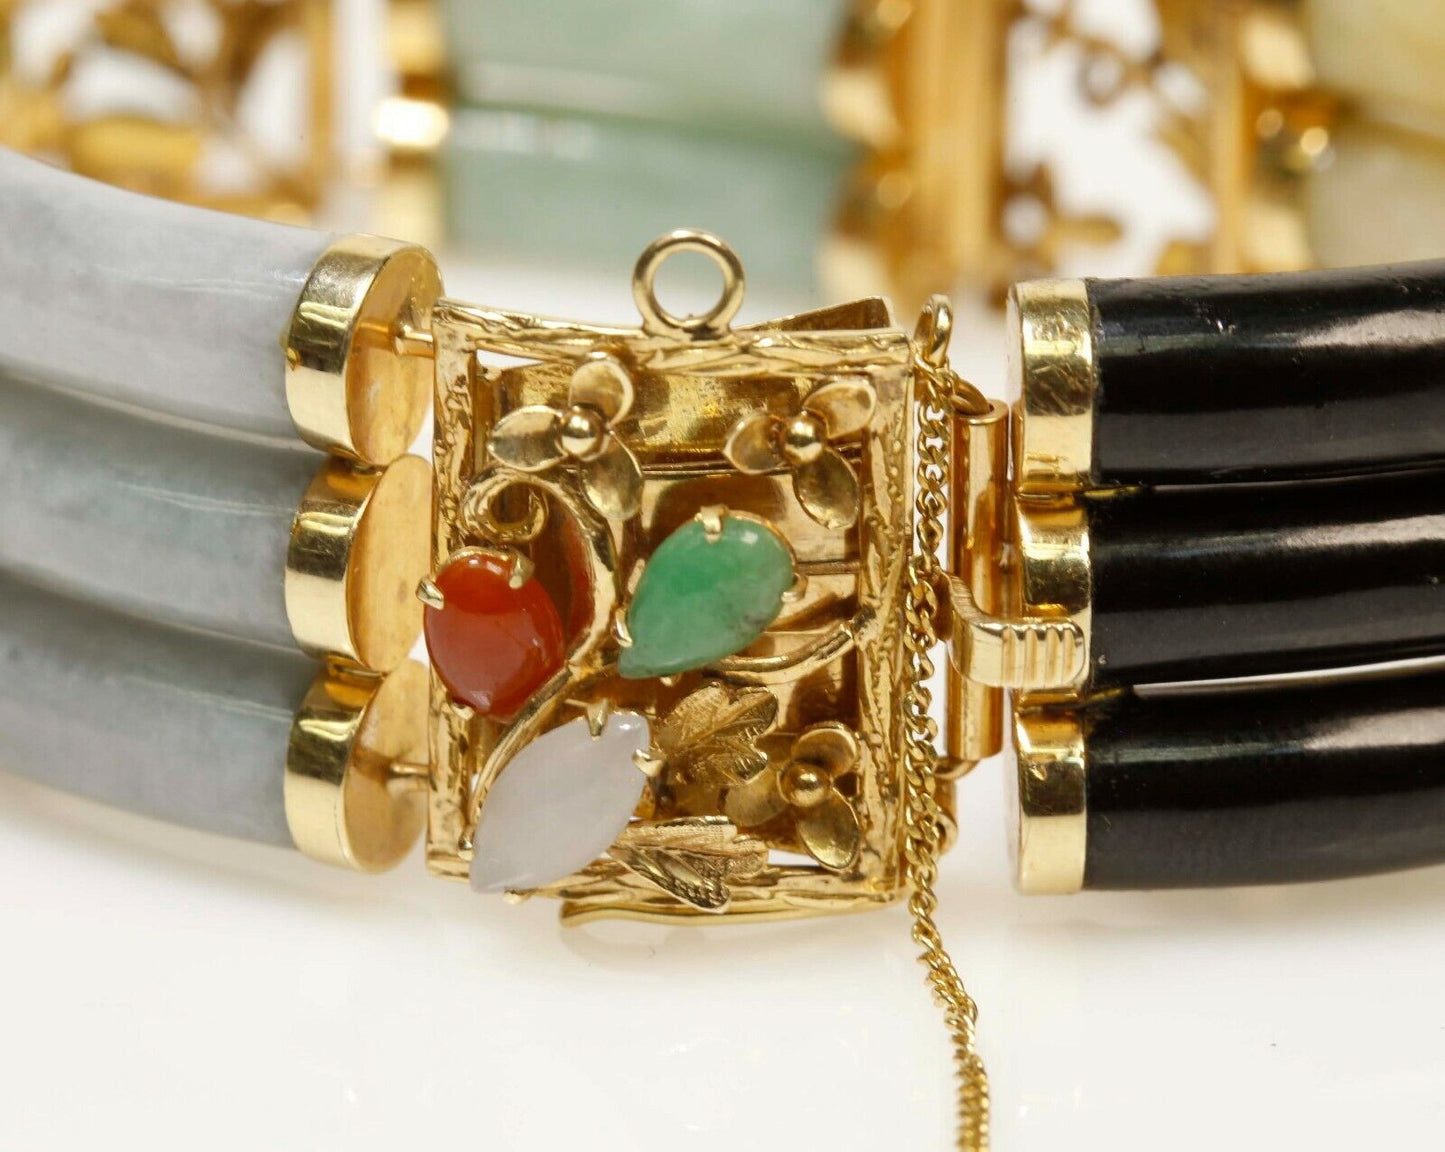 Heavy Multi-Color Jade Bracelet 14K Yellow Gold 51 Grams 7.25”